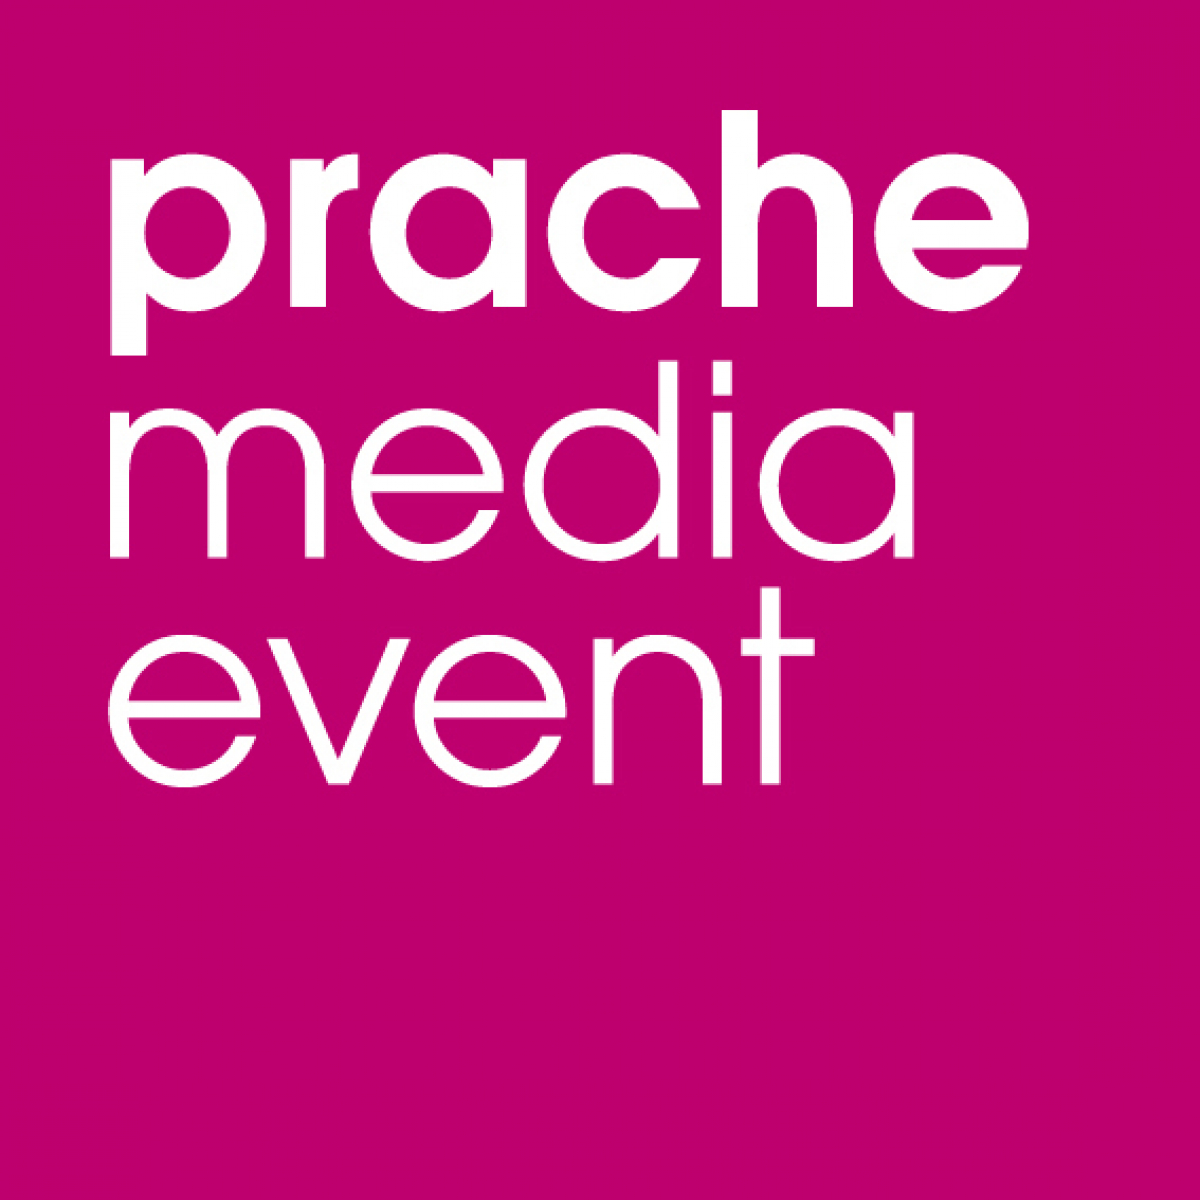 Prache Media Event